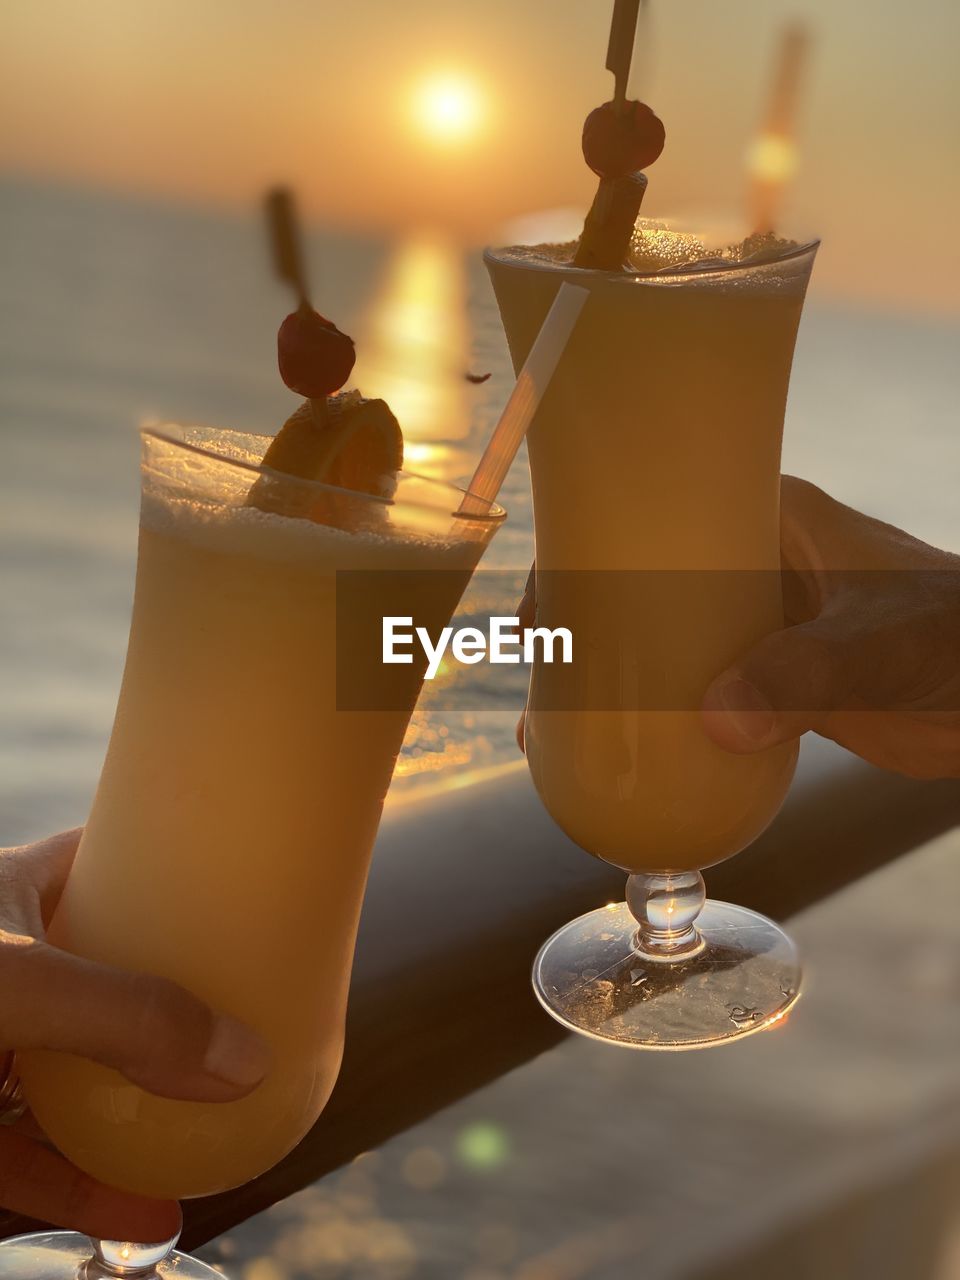 Sunset coacktail cruisetime